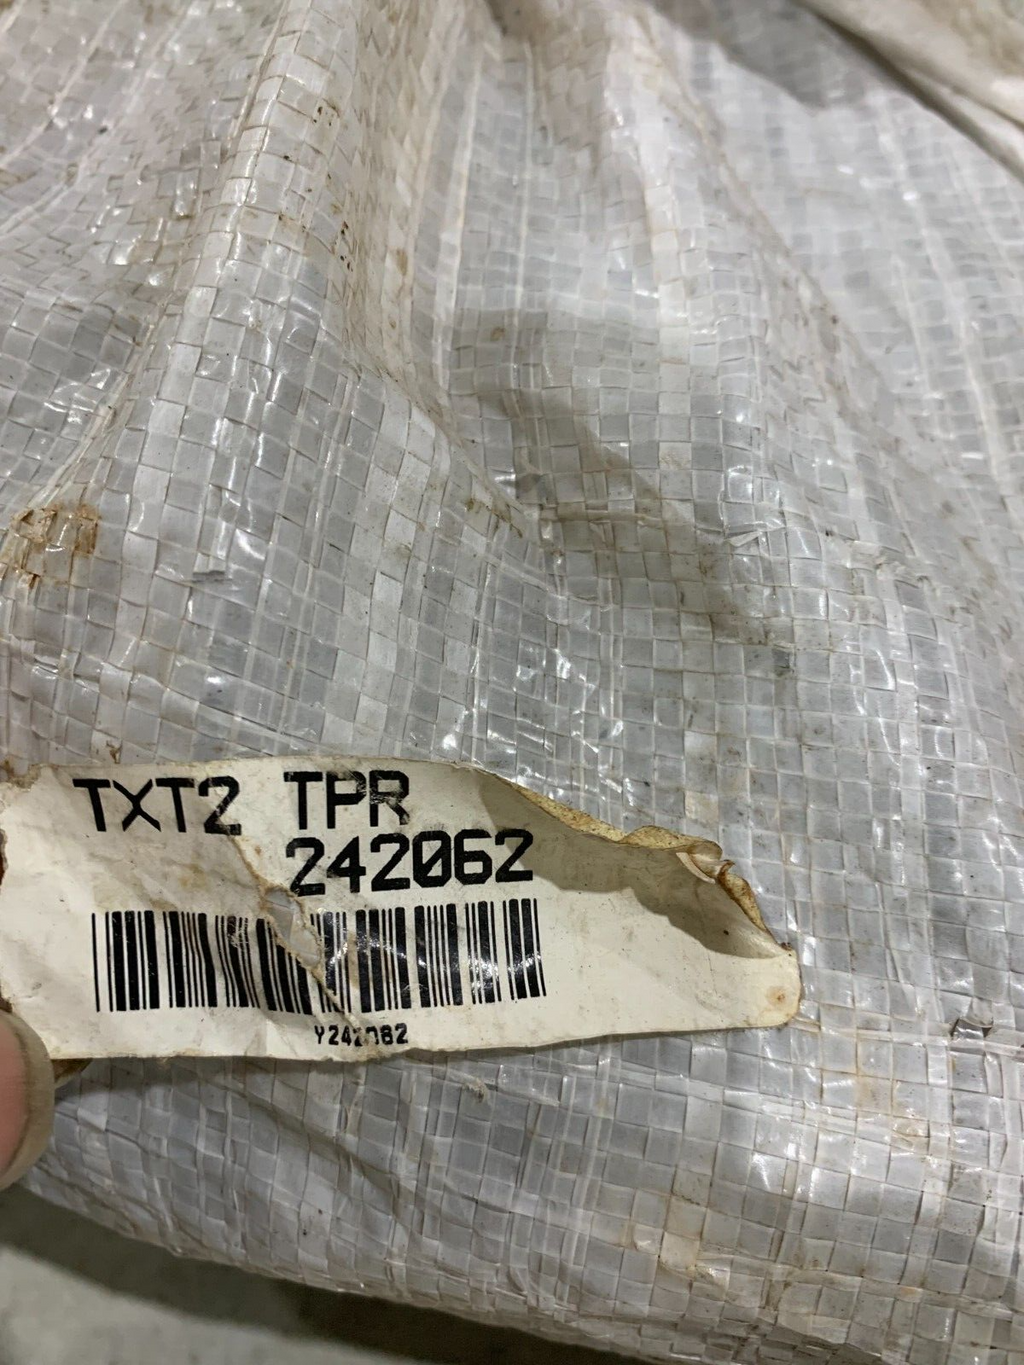 NEW IN BOX DODGE 242082 TORQUE-ARM SPEED REDUCER 14.1:1 RATIO TXT215T